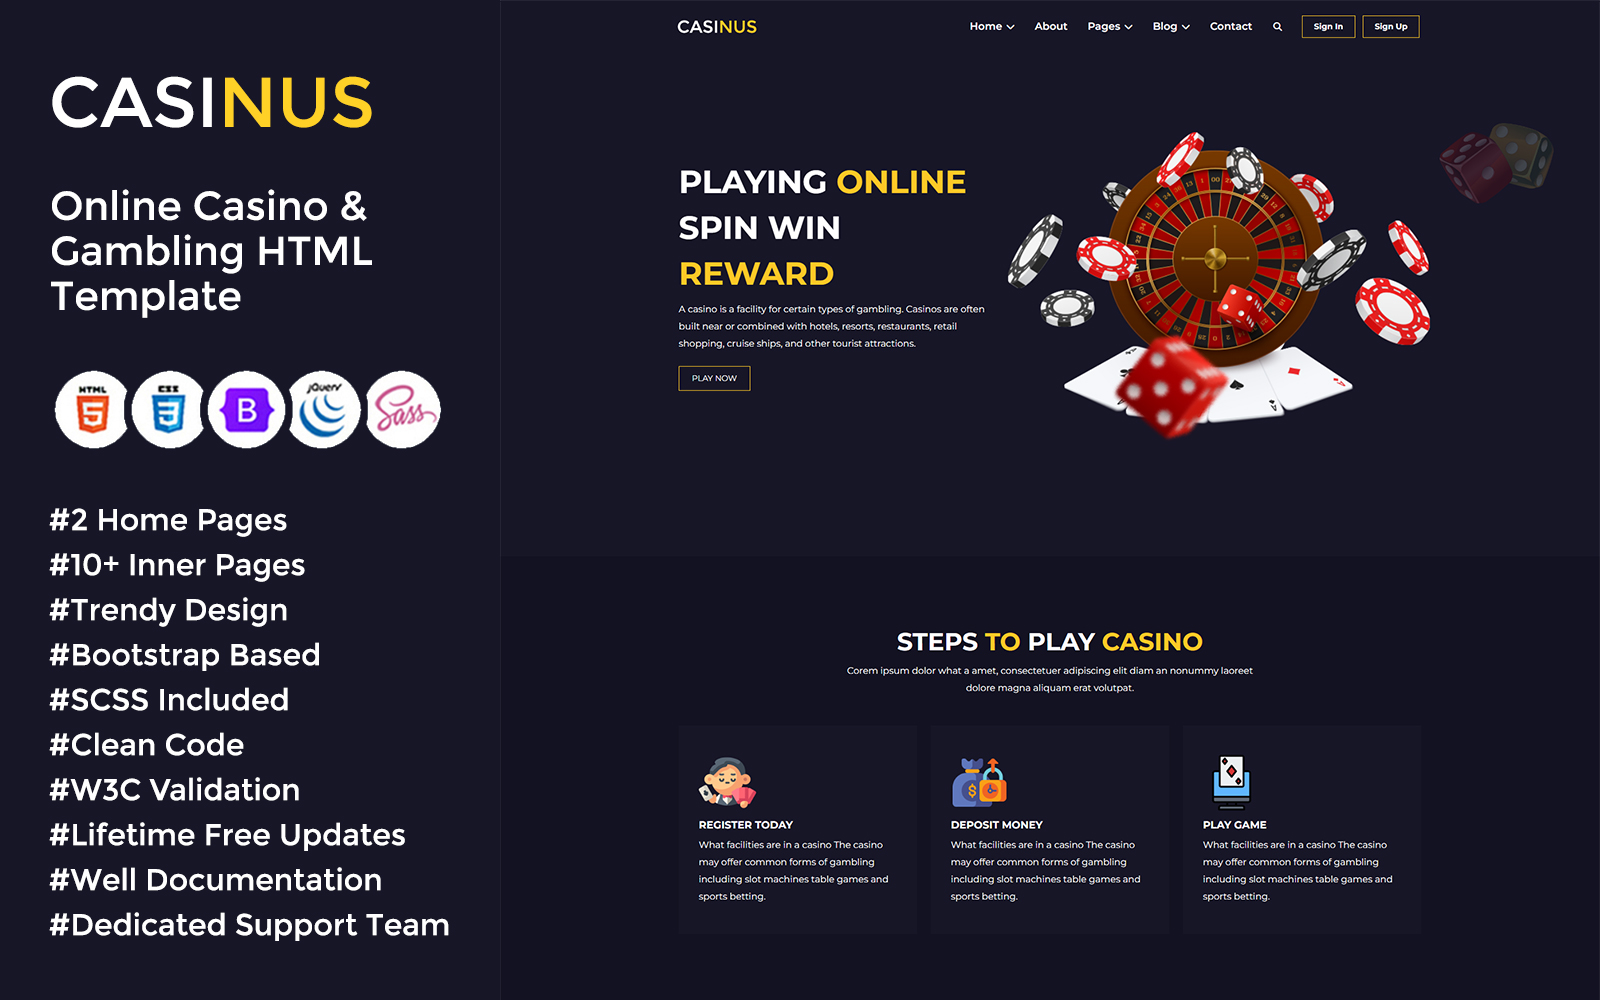 Casinus - Online Casino & Gambling HTML Template